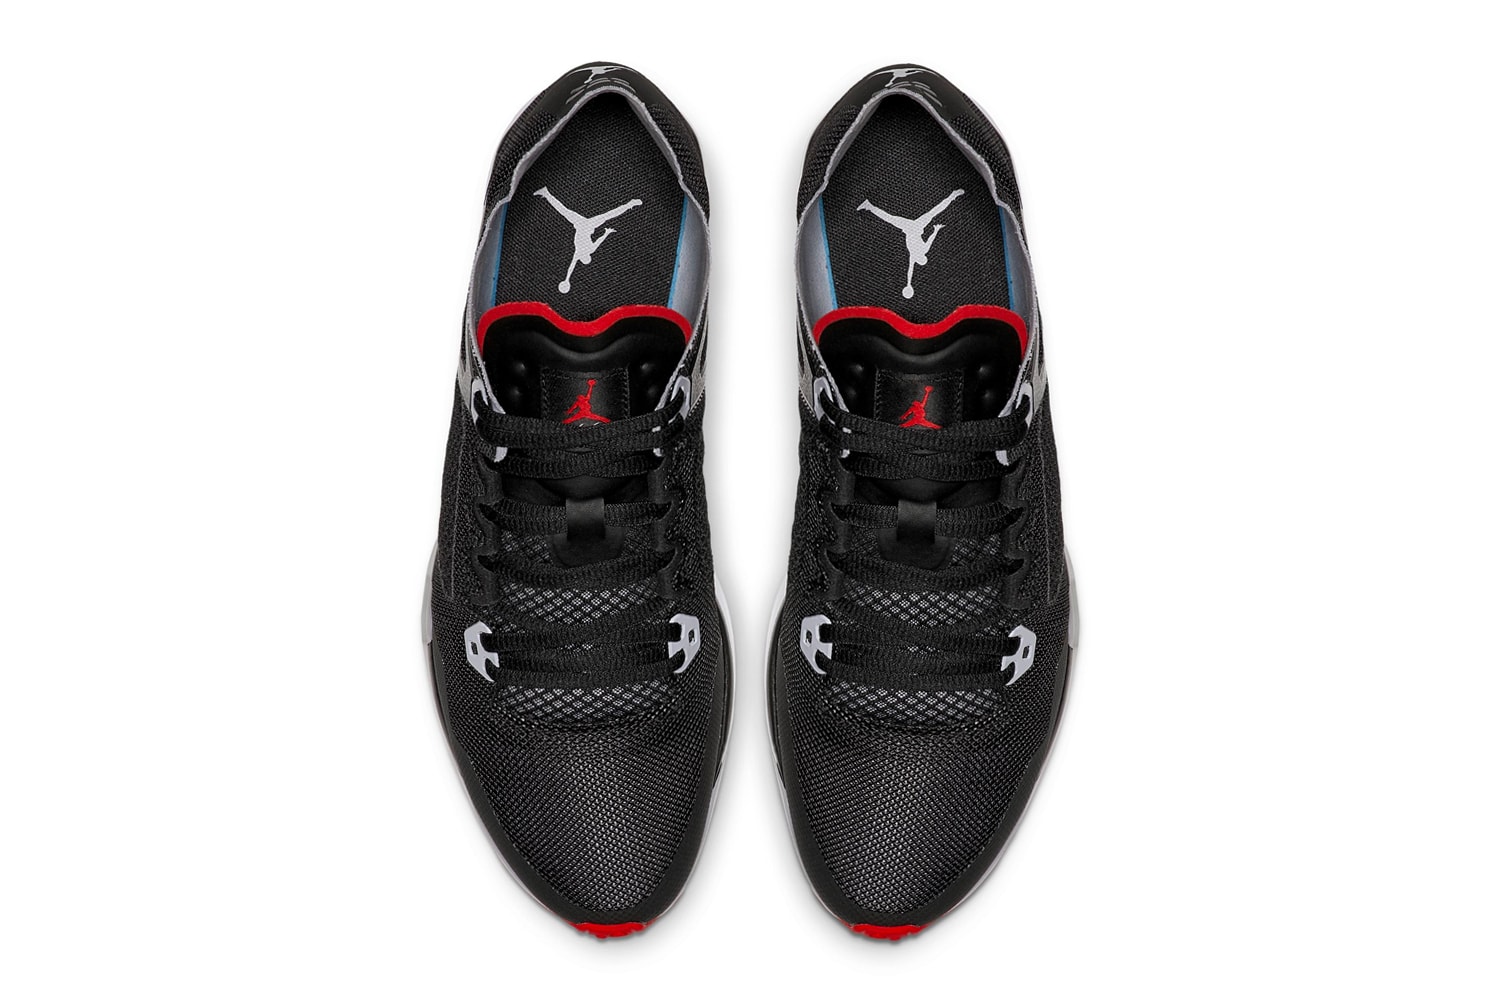 Jordan 89 Racer Black red bred Release Info Date runner running jordan brand sneaker colorway first look Air Jordan 4